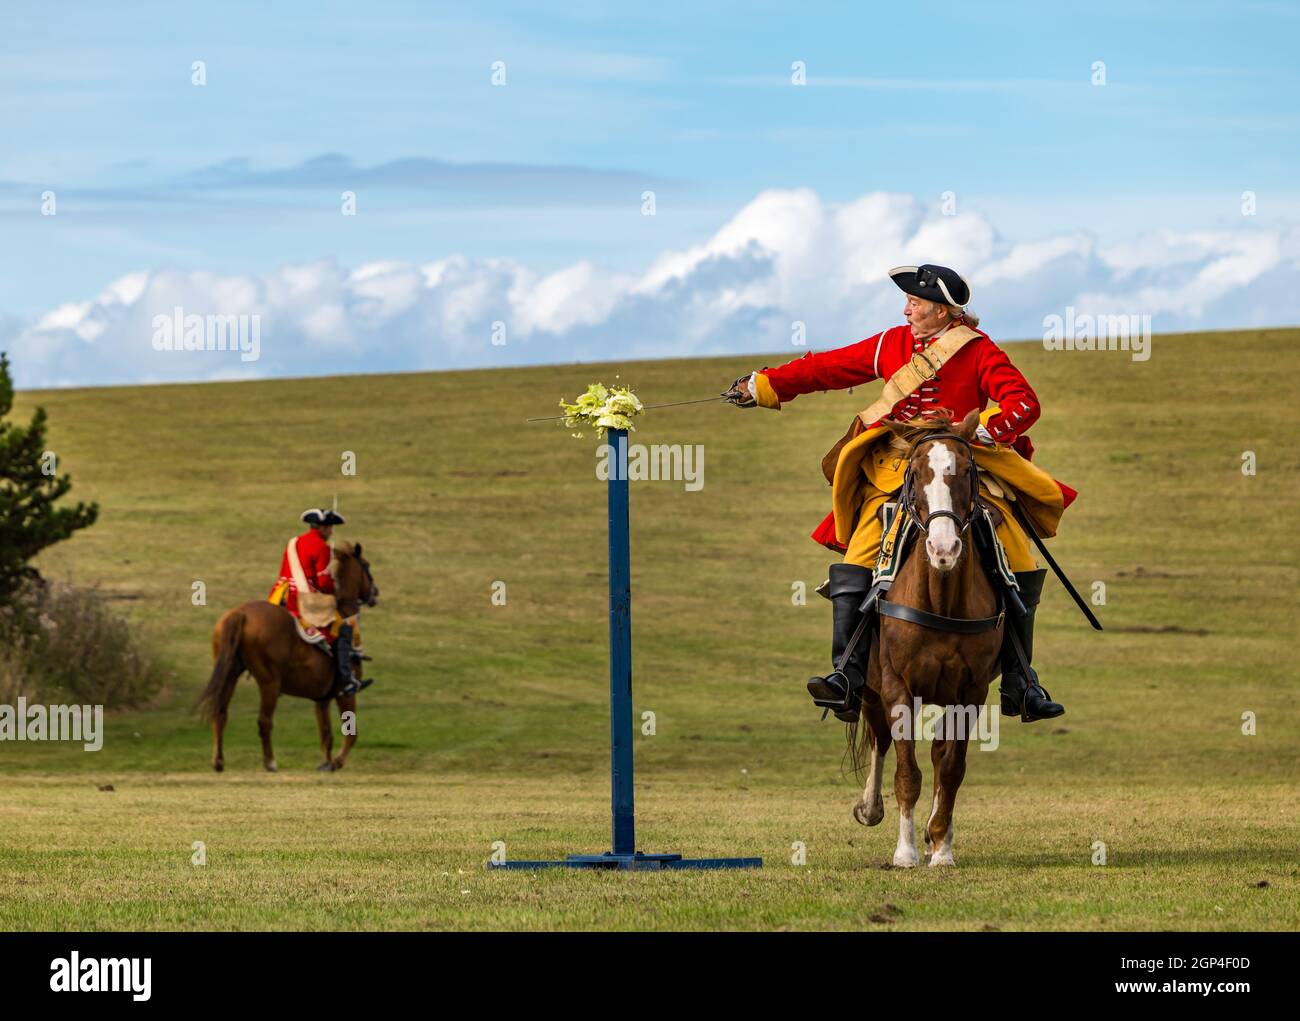 Hanoverian cavalry soldier shows sword skills on horseback in Battle of Prestonpans re-enactment, East Lothian, Scotland, UK Stock Photo